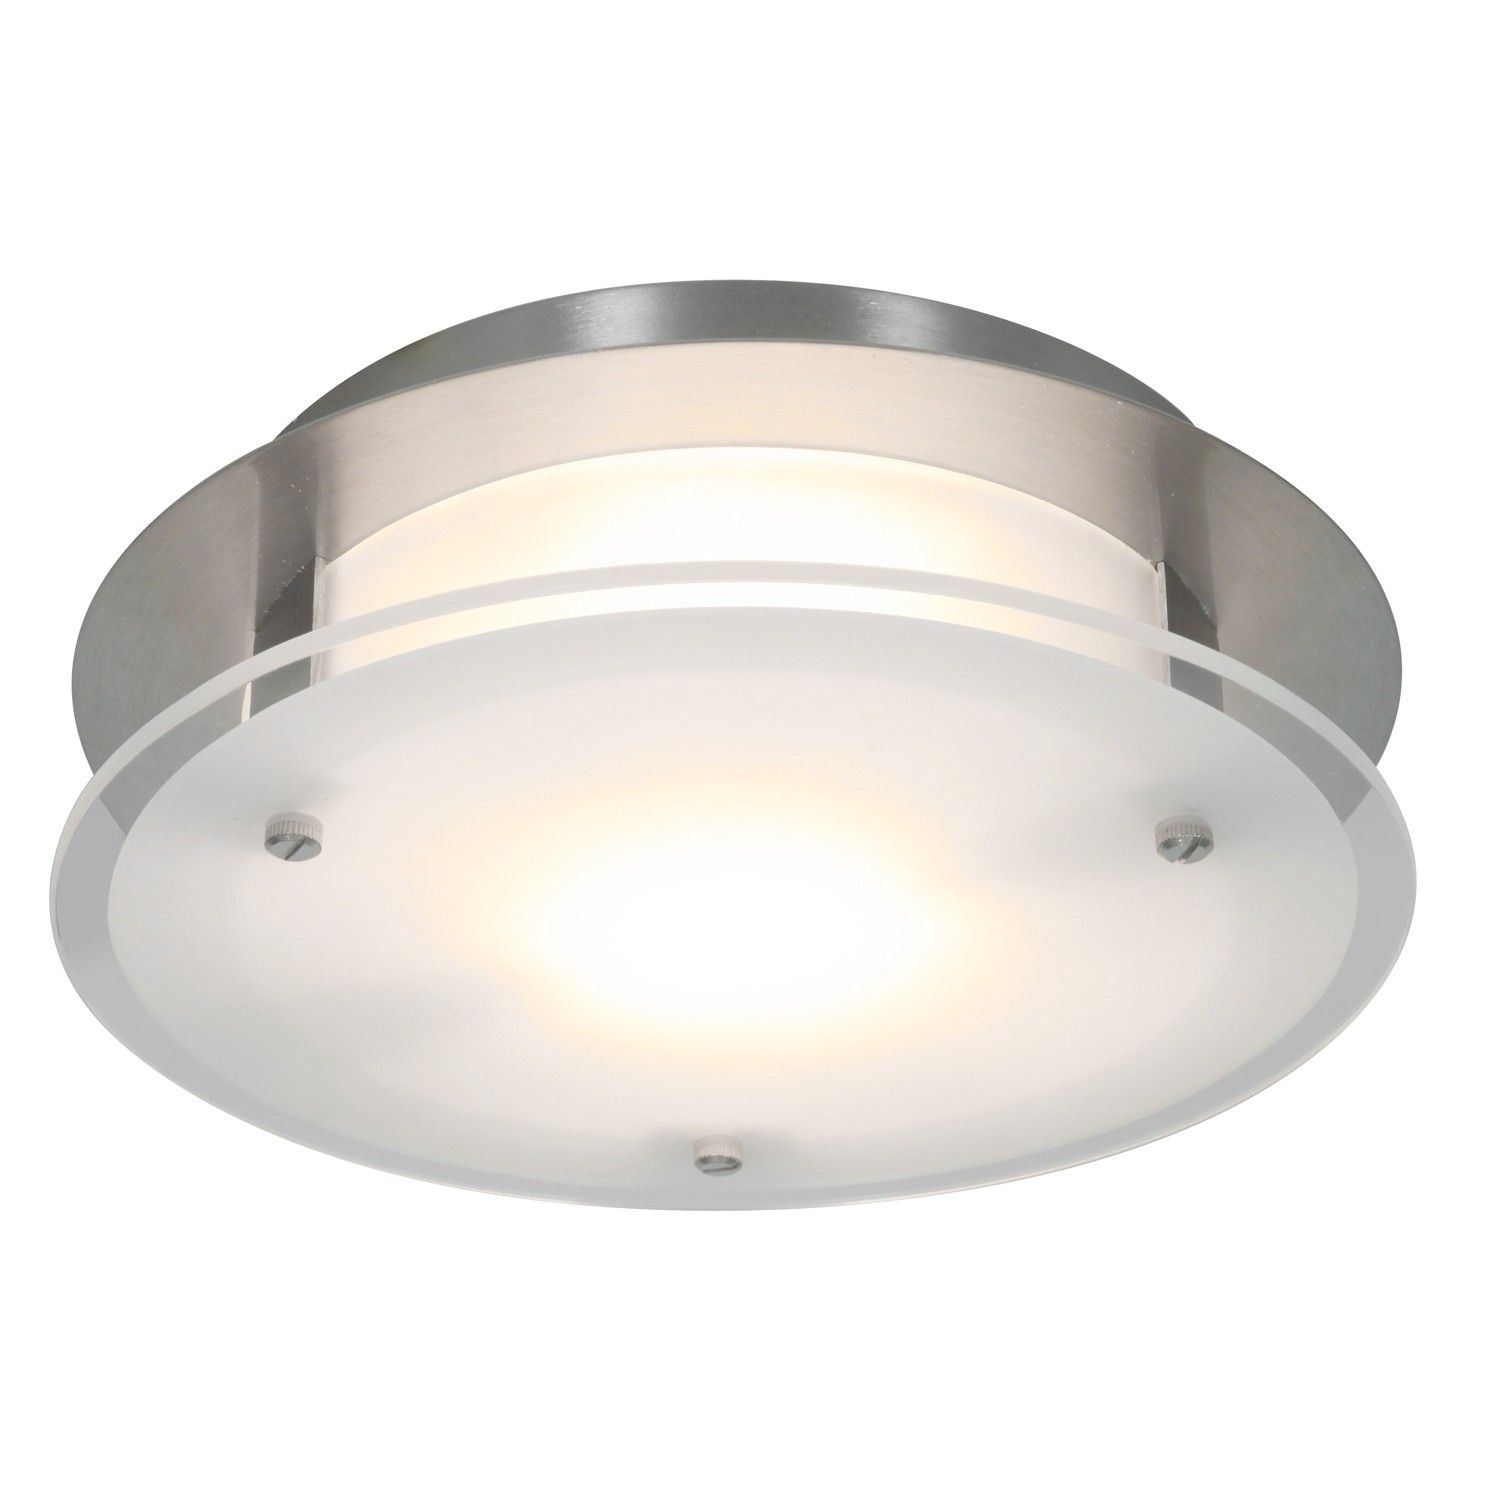 Luxury Ductless Bathroom Fan With Light Bathroom Fan Light intended for size 1500 X 1500